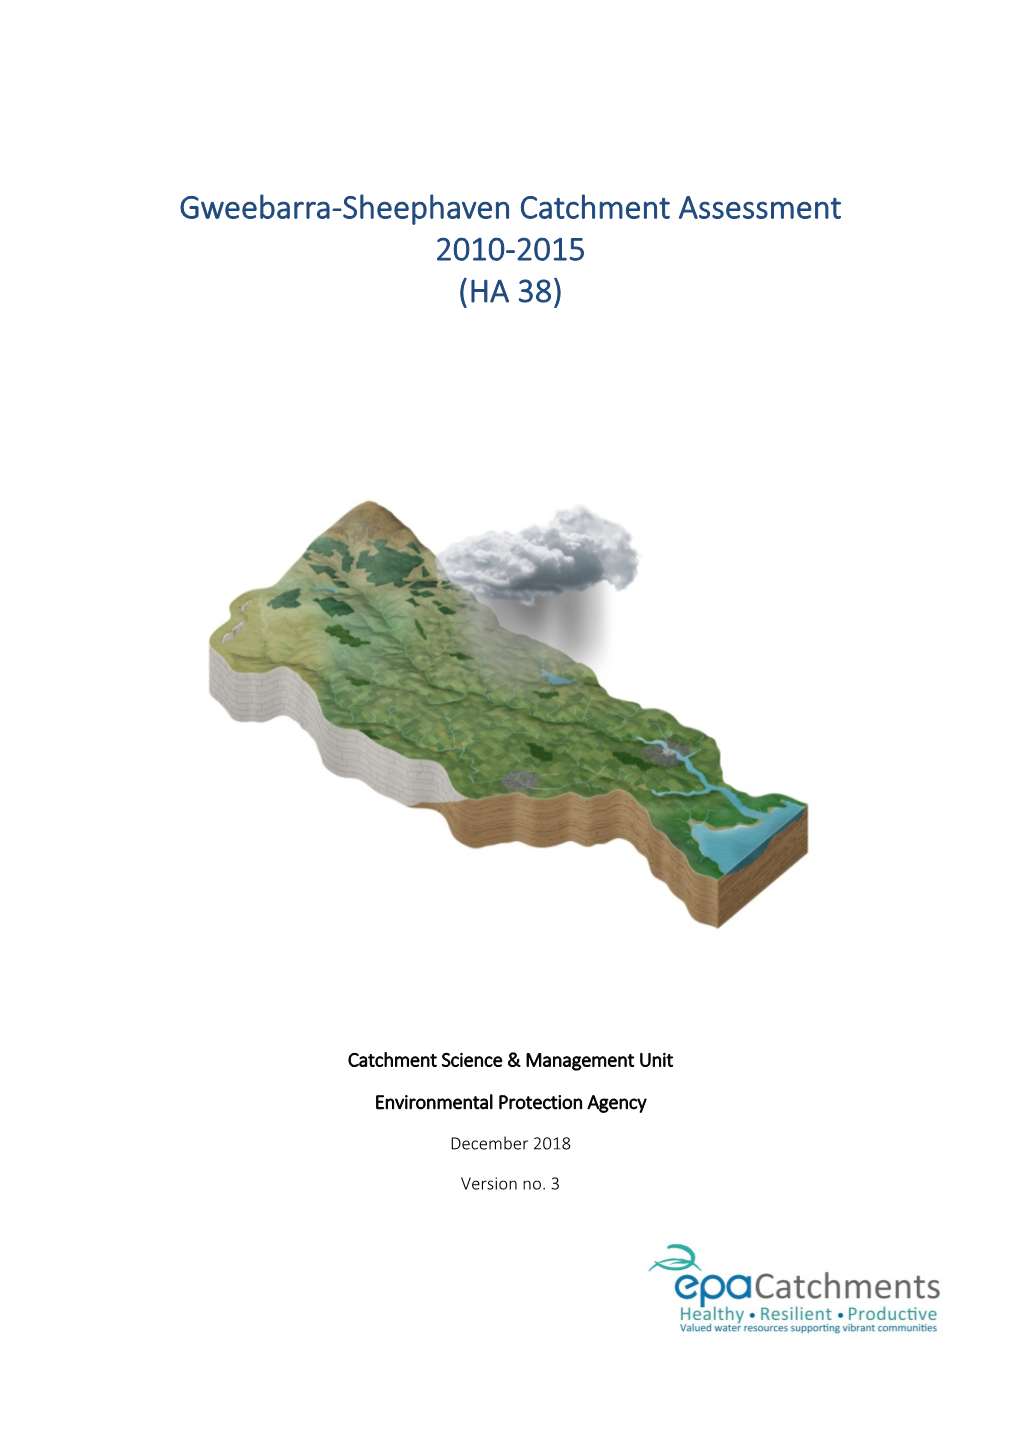 Gweebarra-Sheephaven Catchment Assessment 2010-2015 (HA 38)